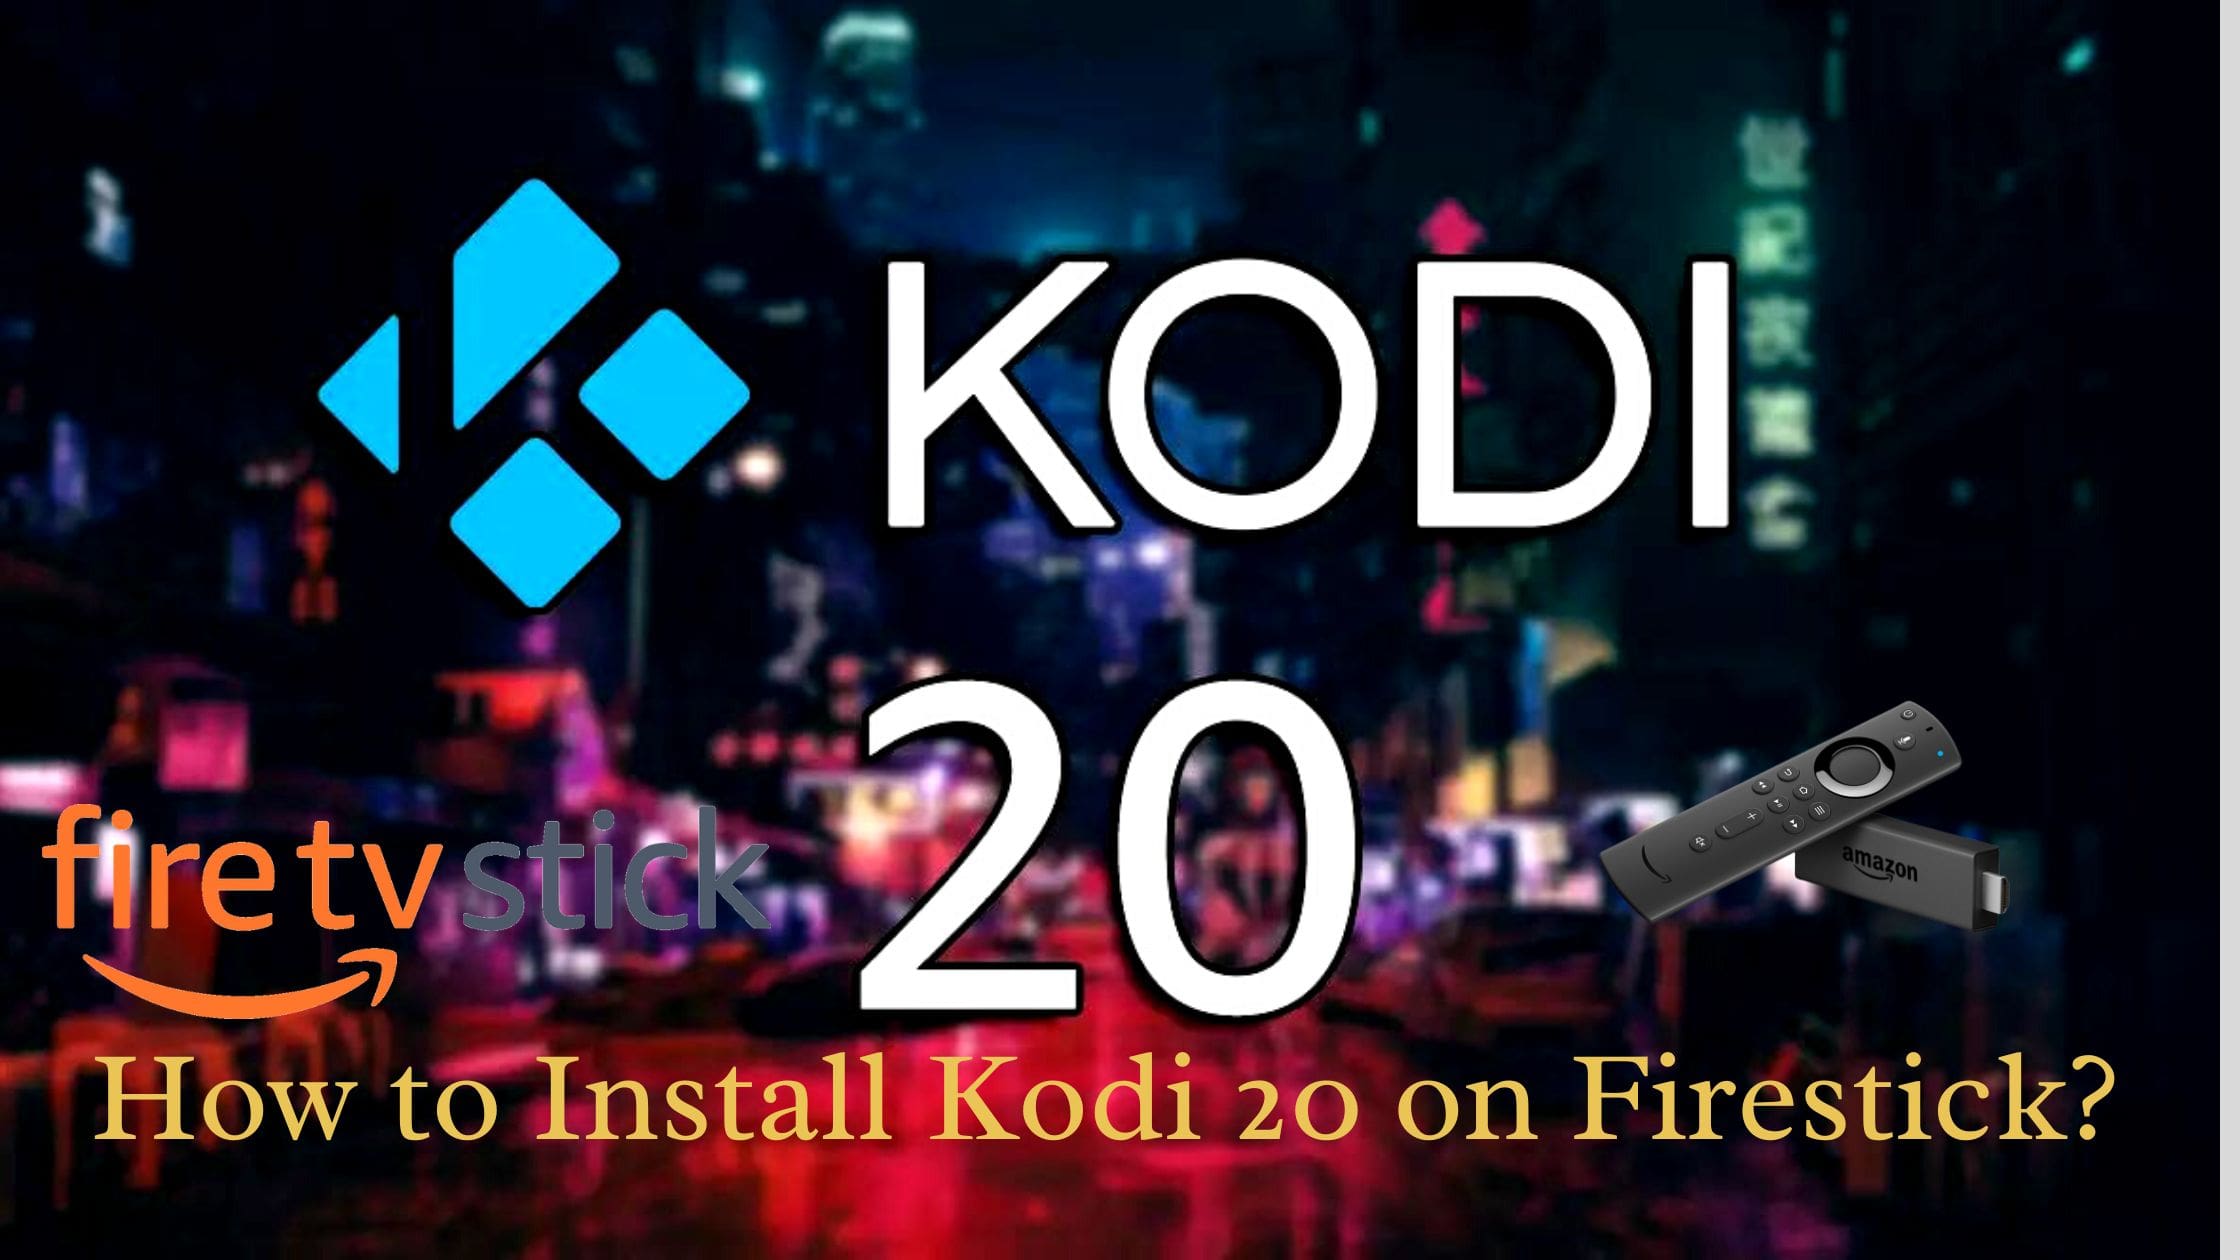 How to Install Kodi 20 on Firestick?